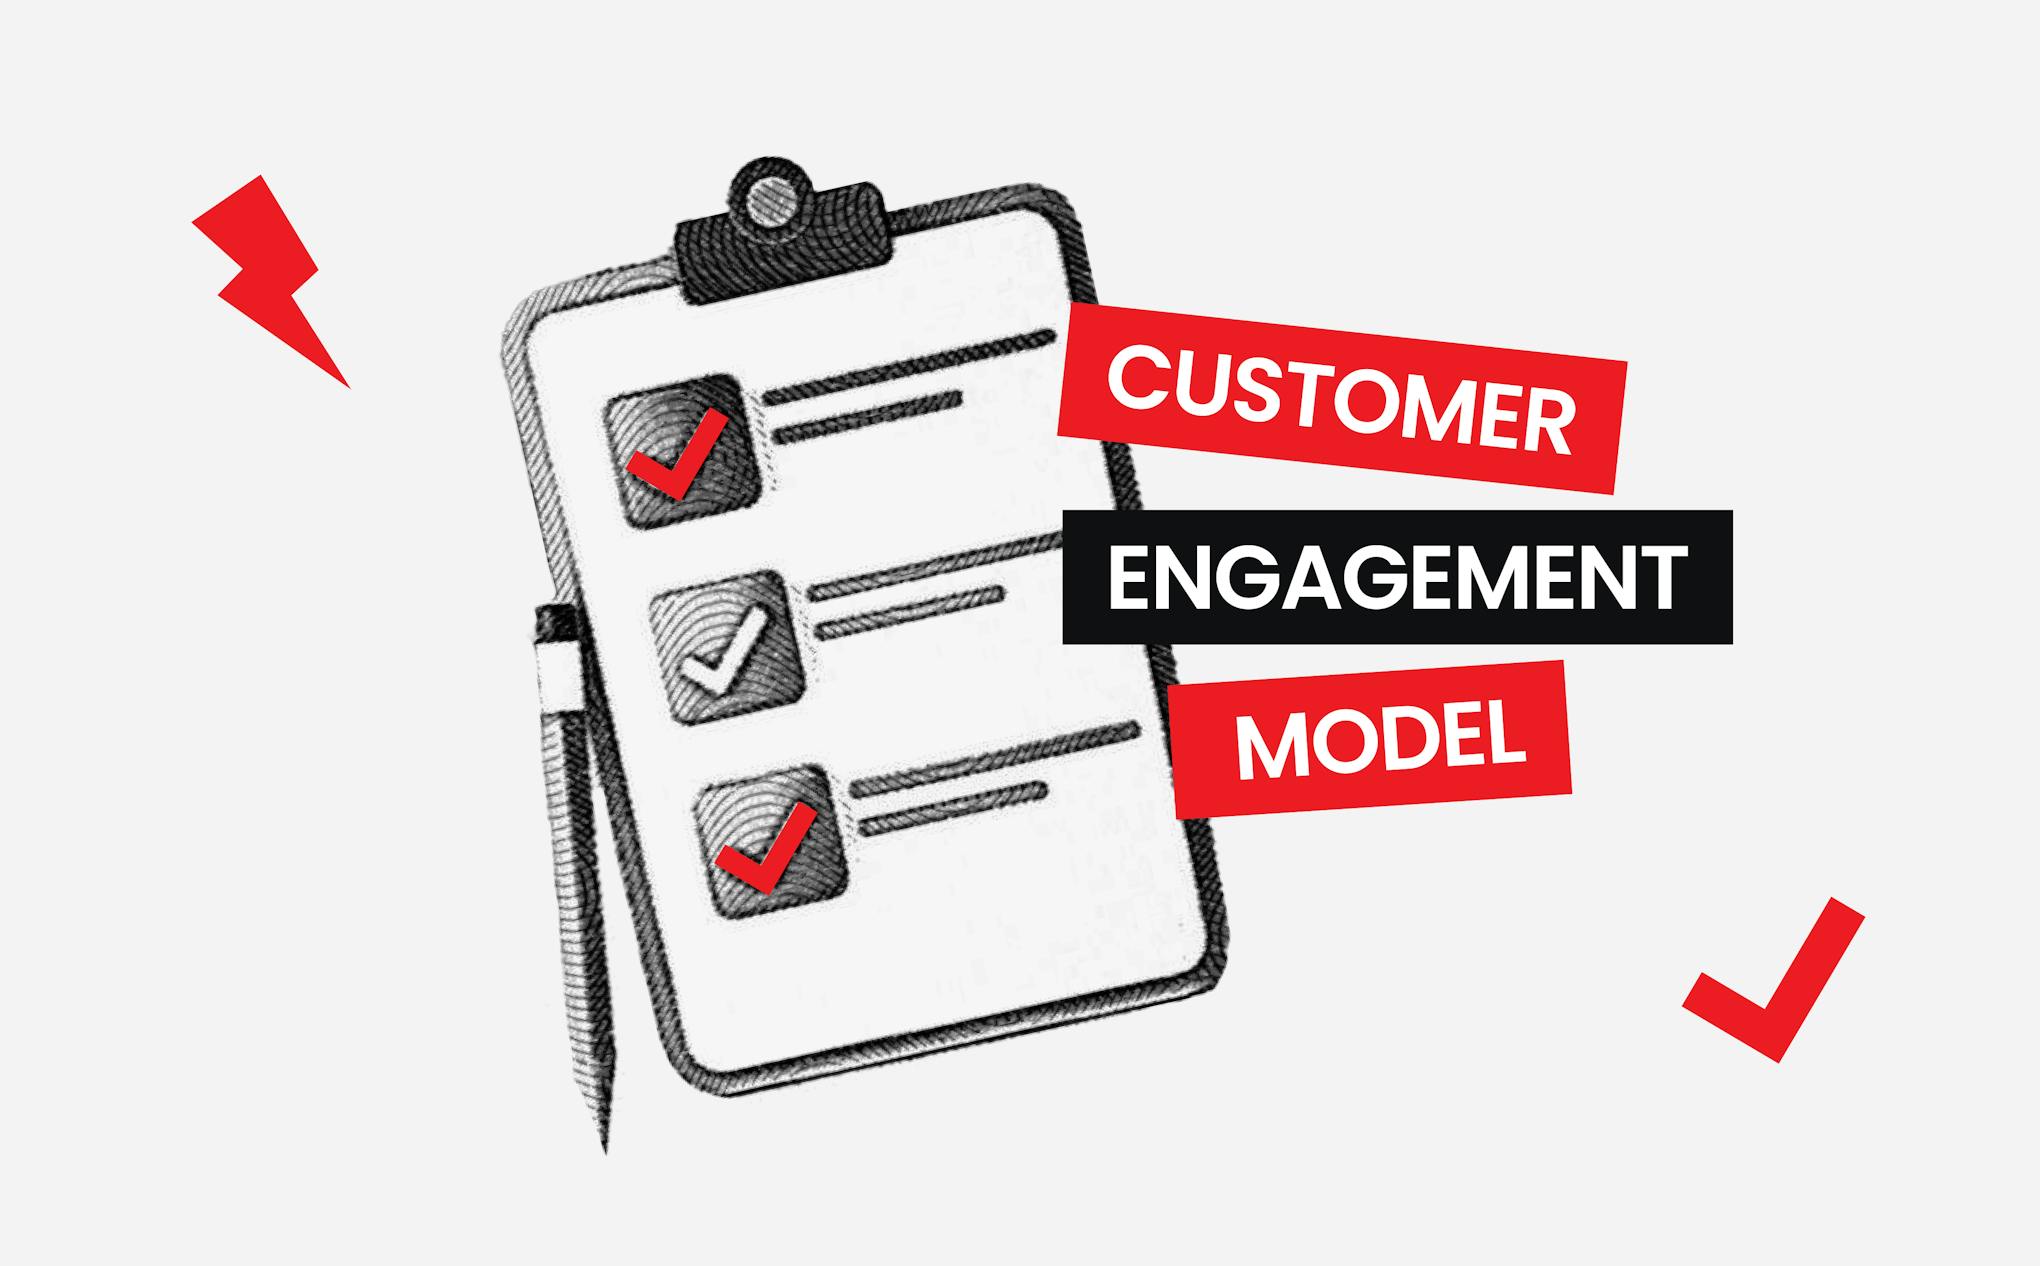 Customer engagement model.